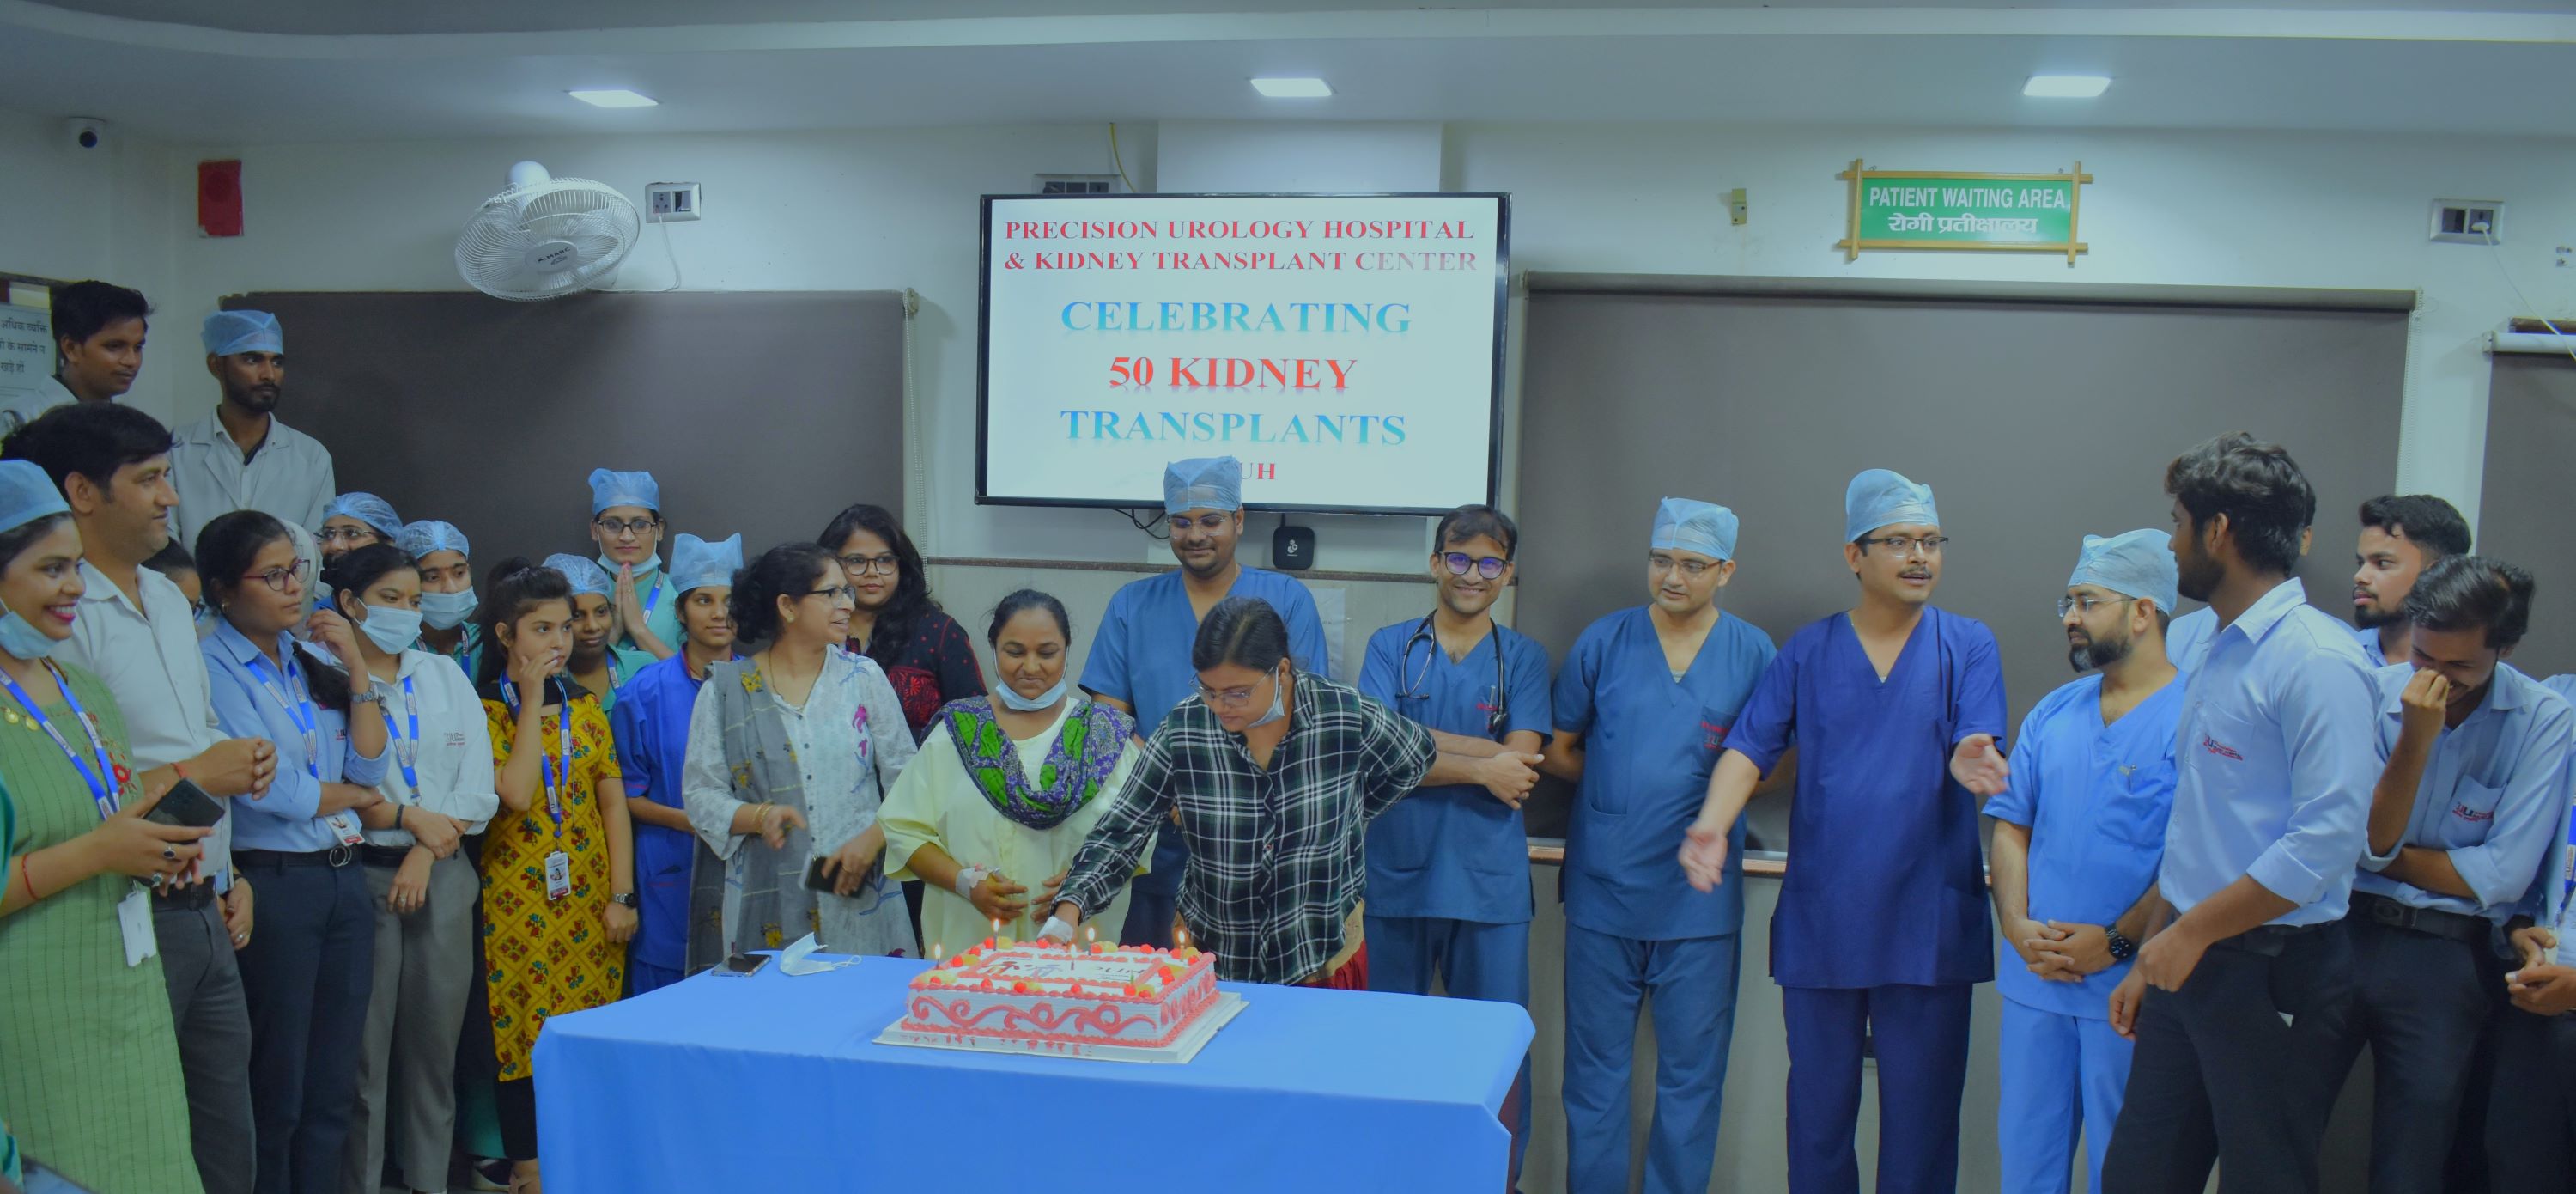 Celebrating 50 kidney transplants@PUH